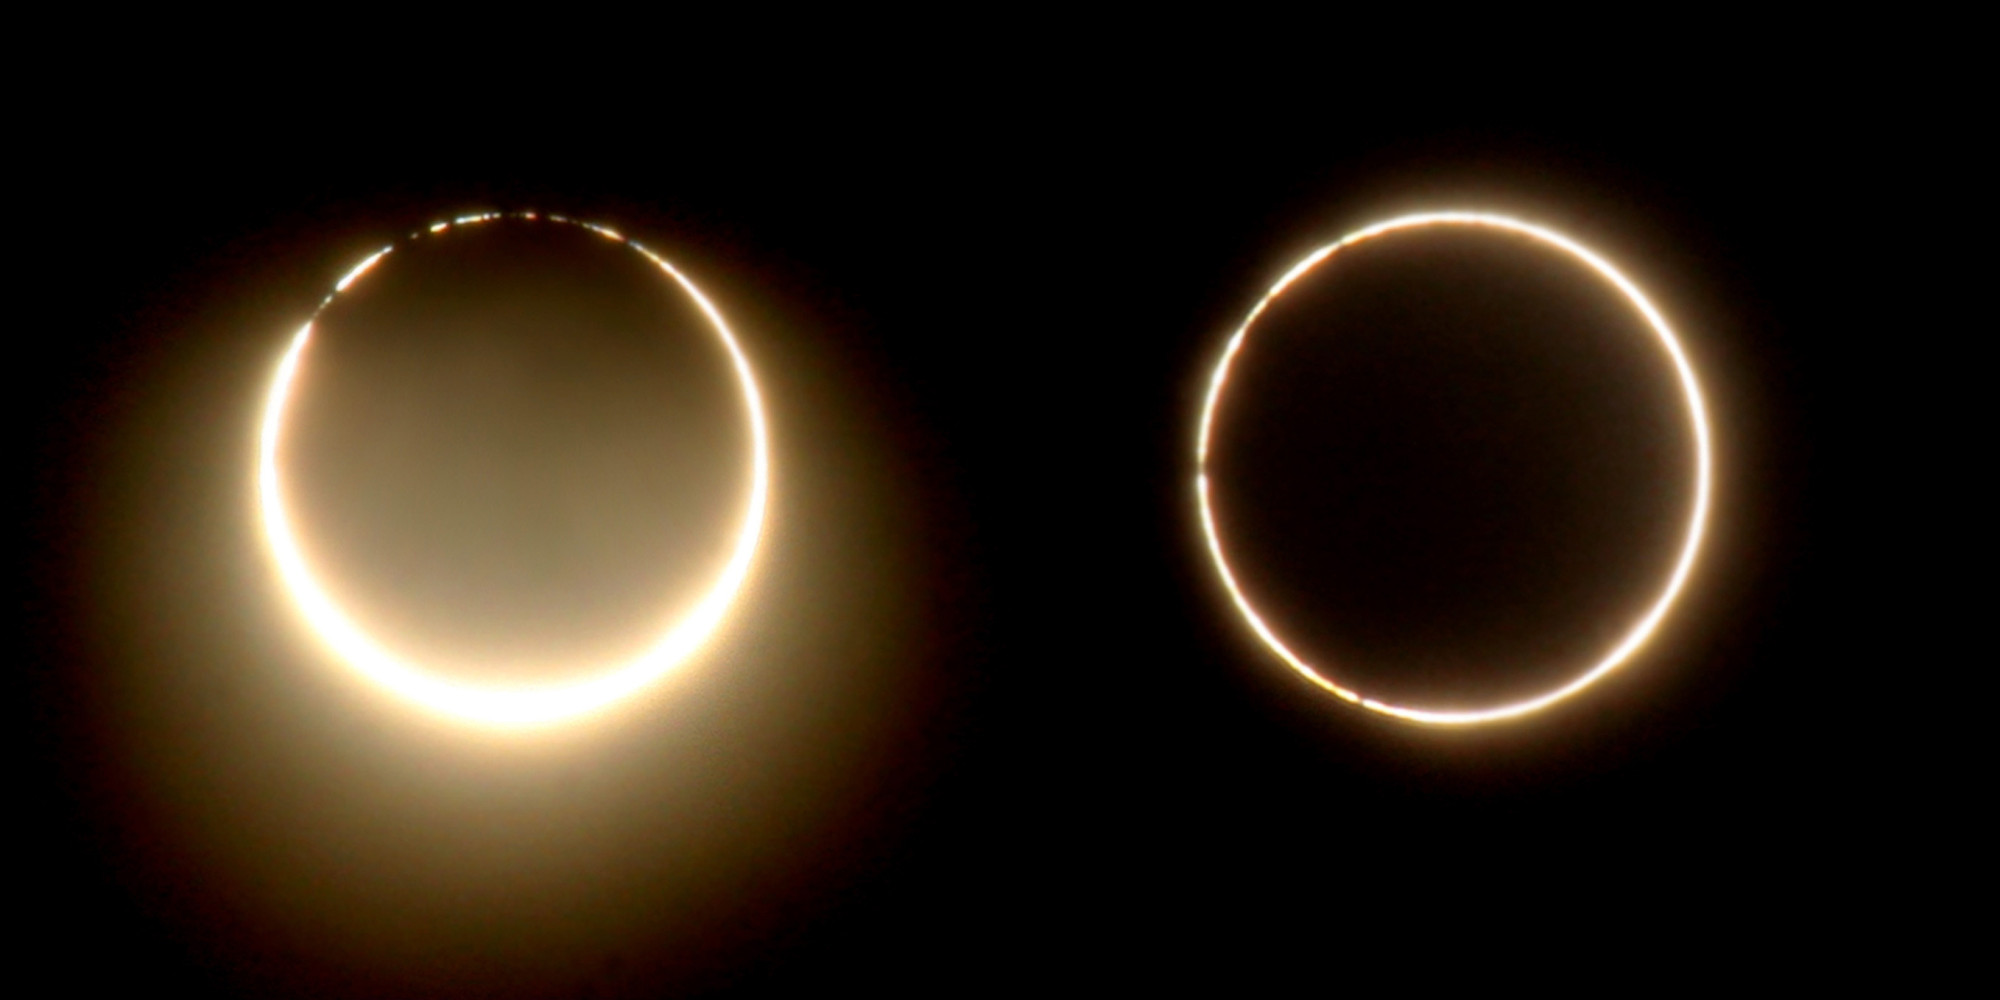 Hybrid Solar Eclipse 2013 How To See Rare Celestial Sight On November 3